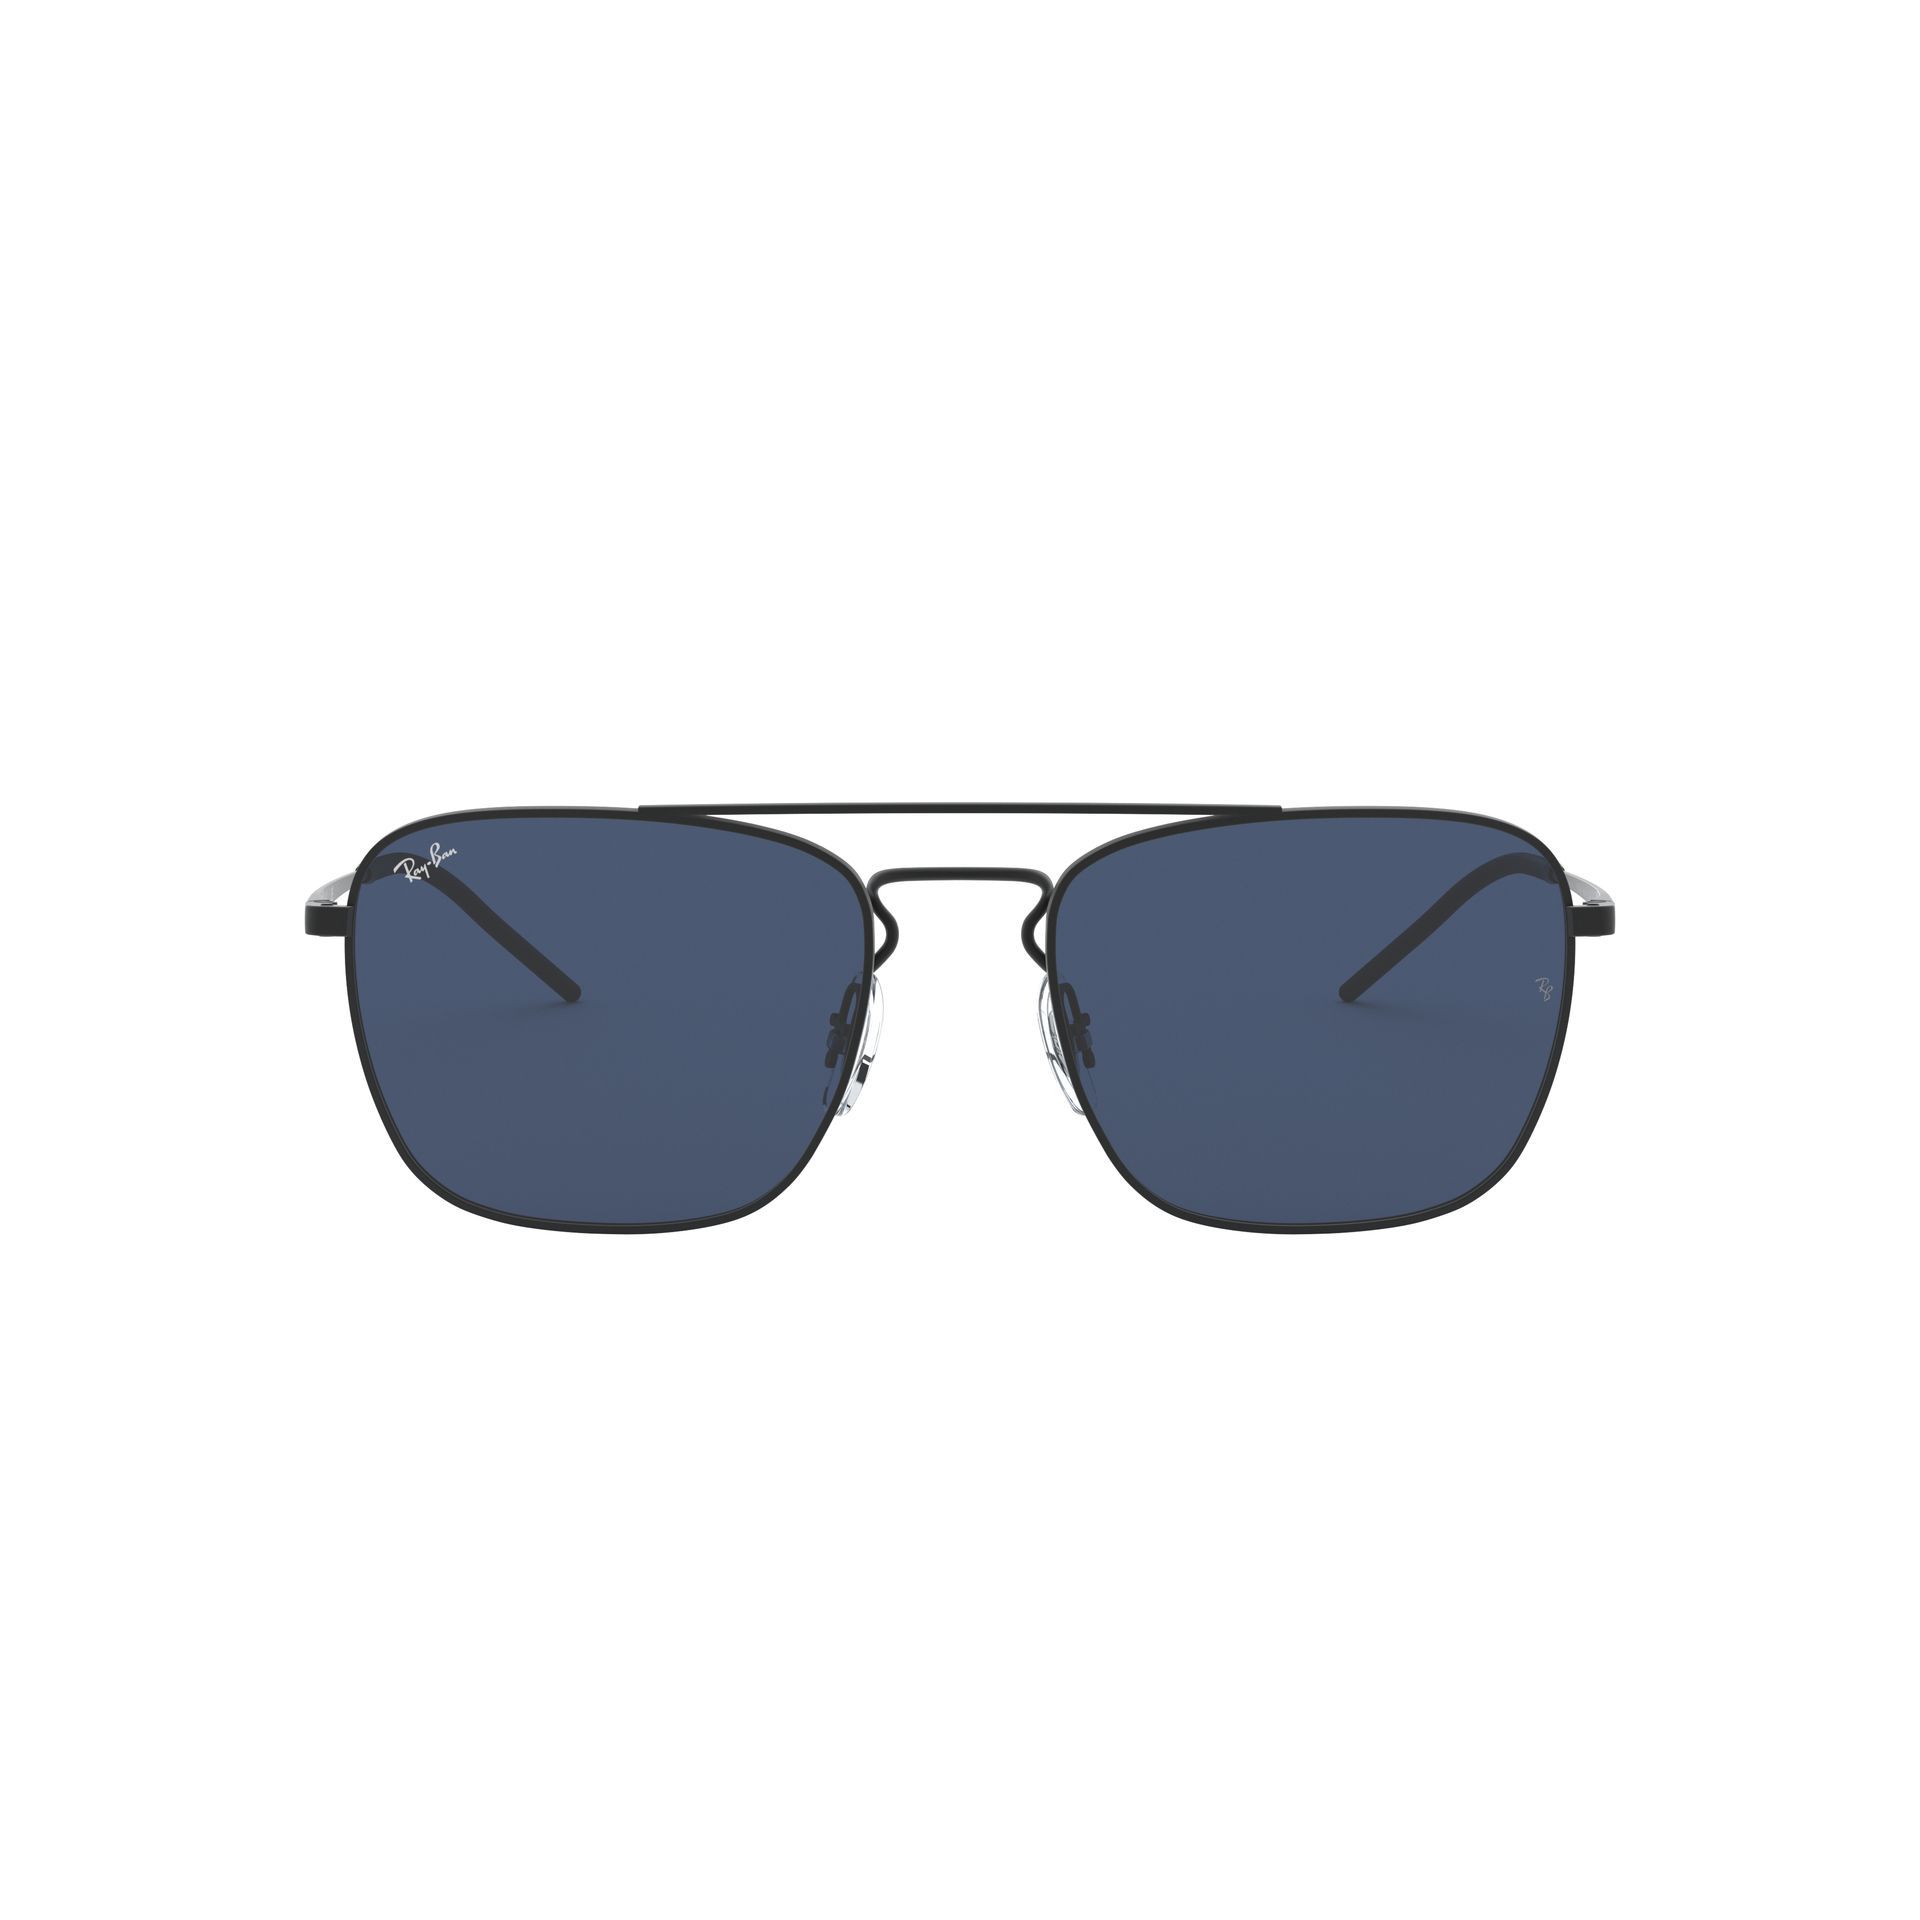 0RB3588 Square Sunglasses 901480 - size 55